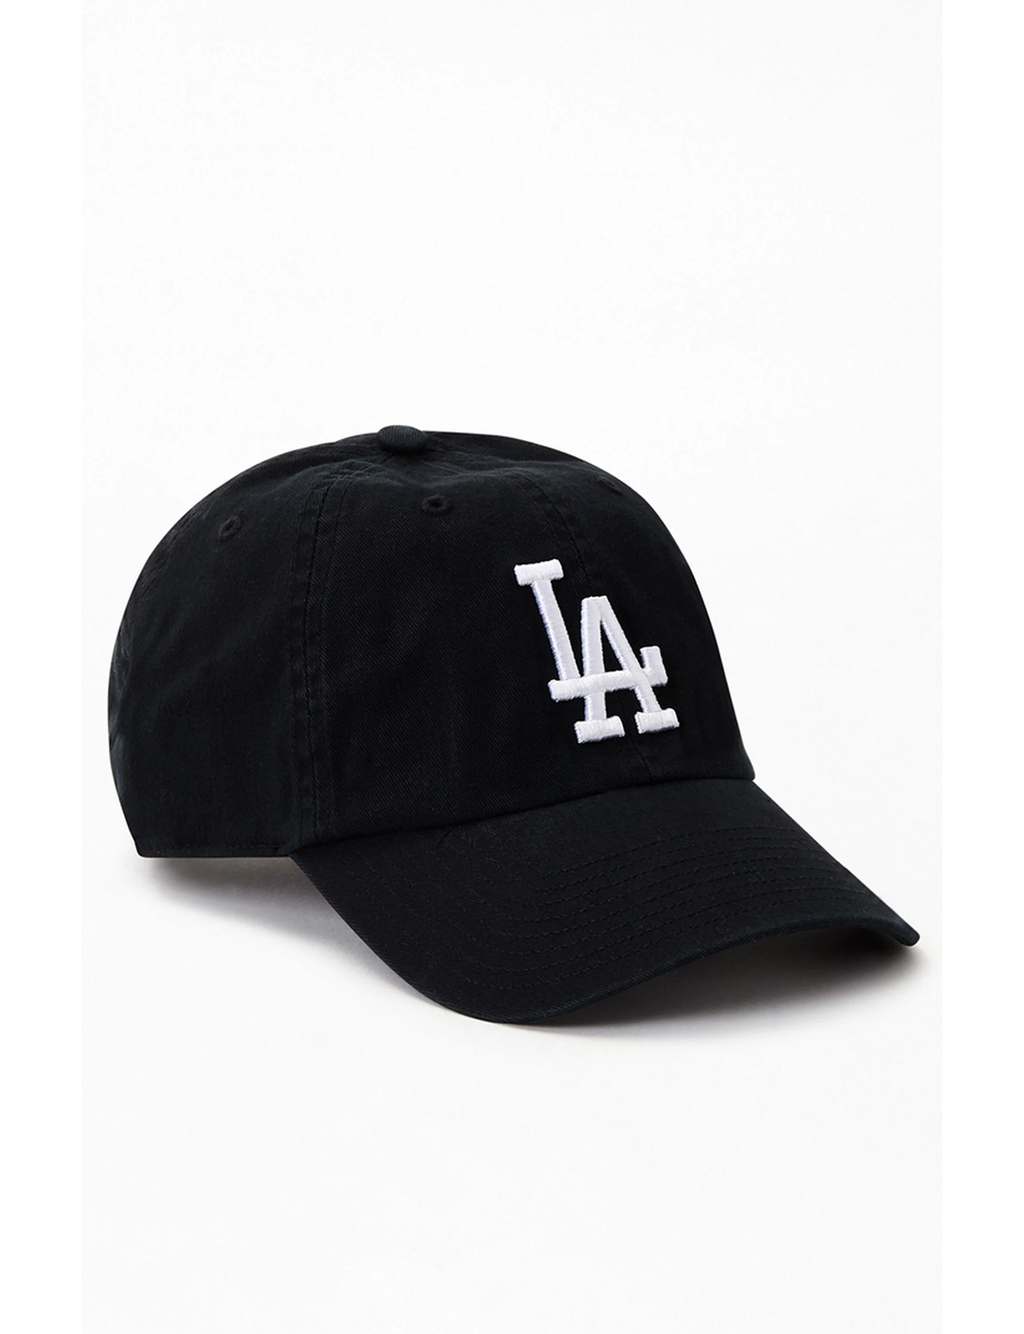 LA Dodgers Basic Ball Cap, Black/White